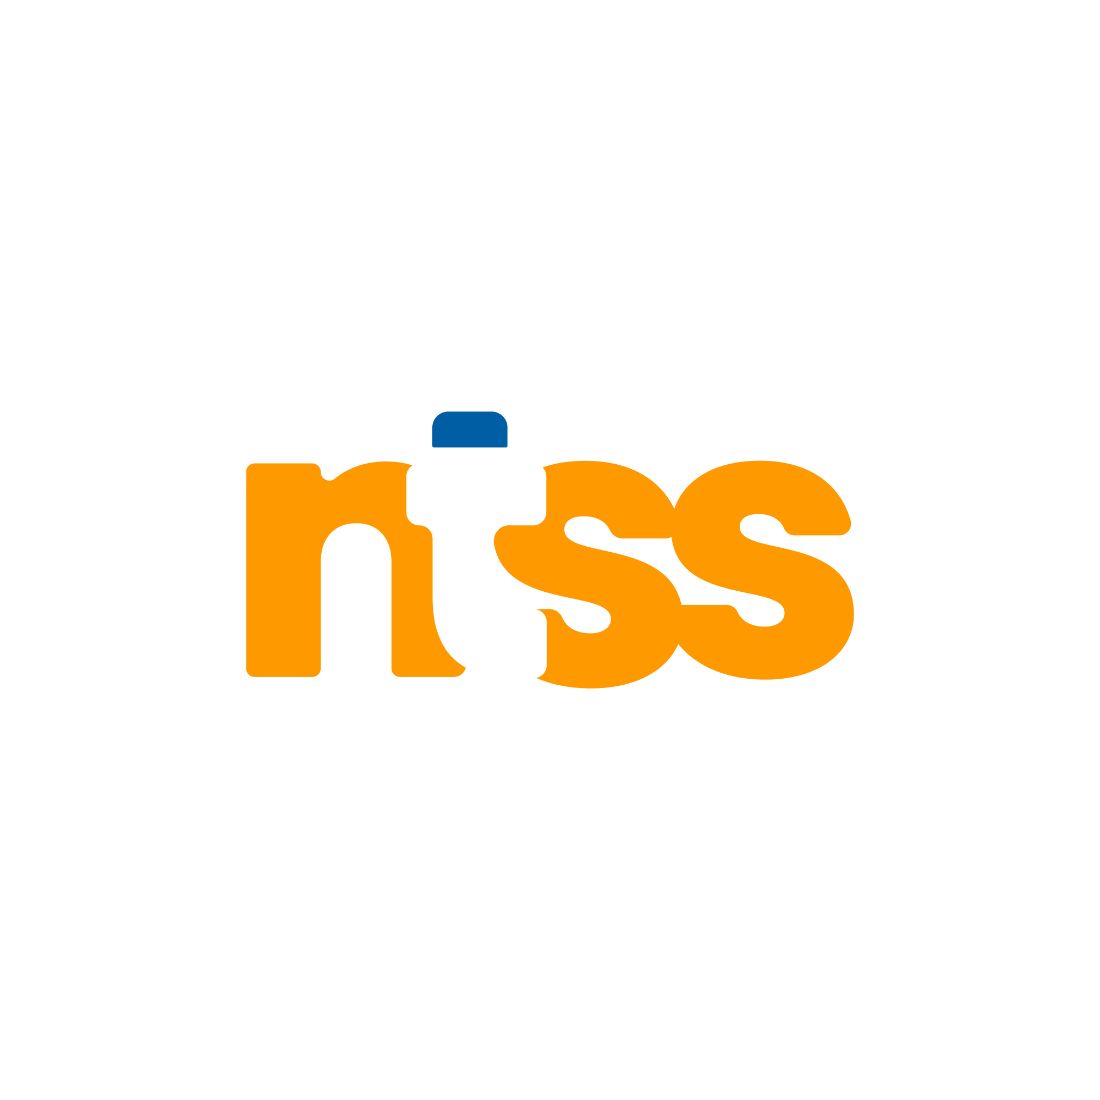 Ntss Letter Logo Orange Design preview image.